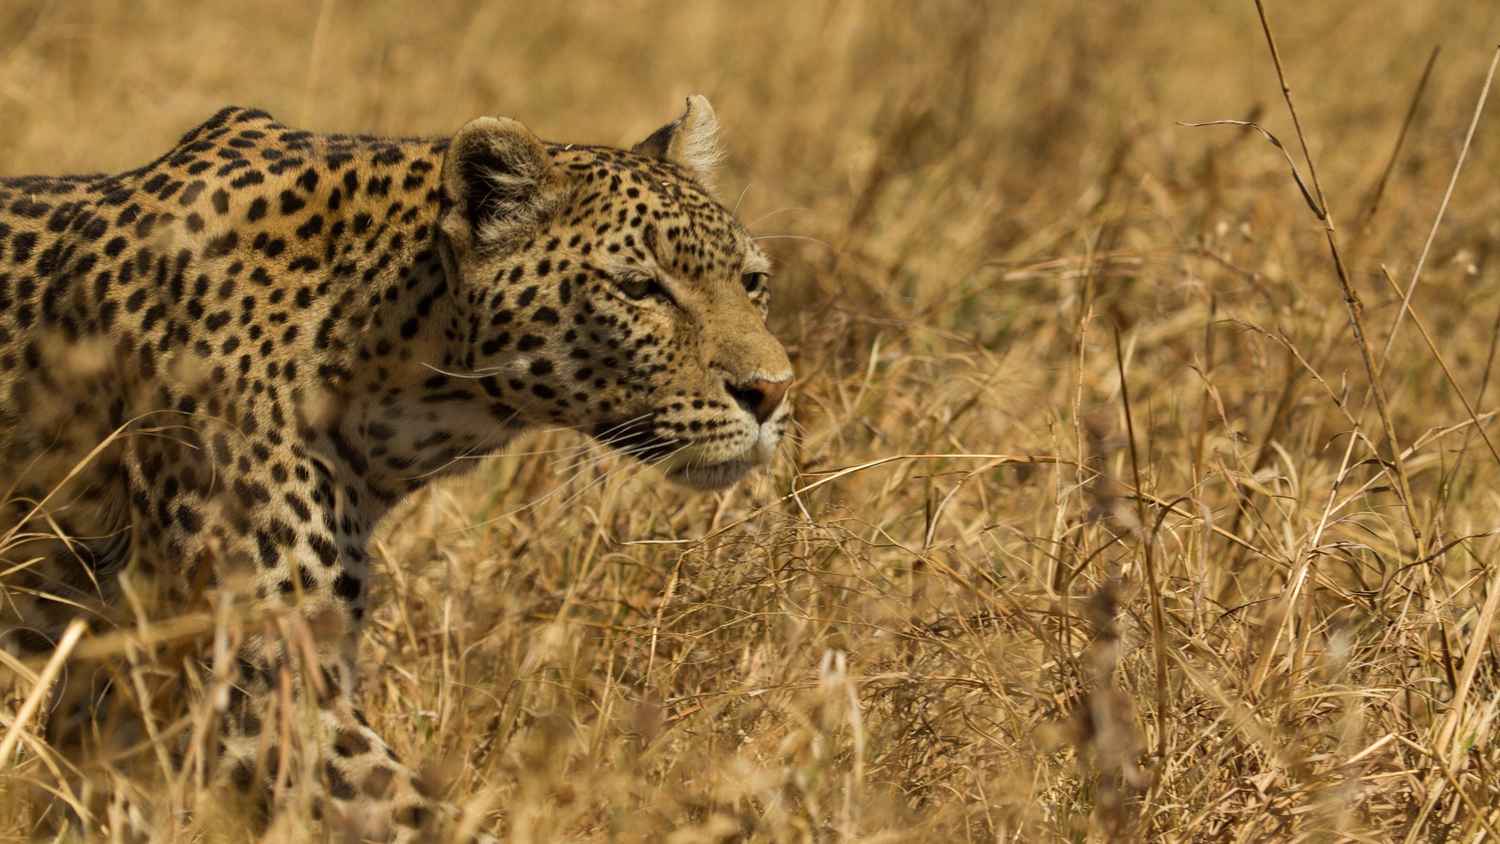 Leopard and Hyena: Strange Alliance